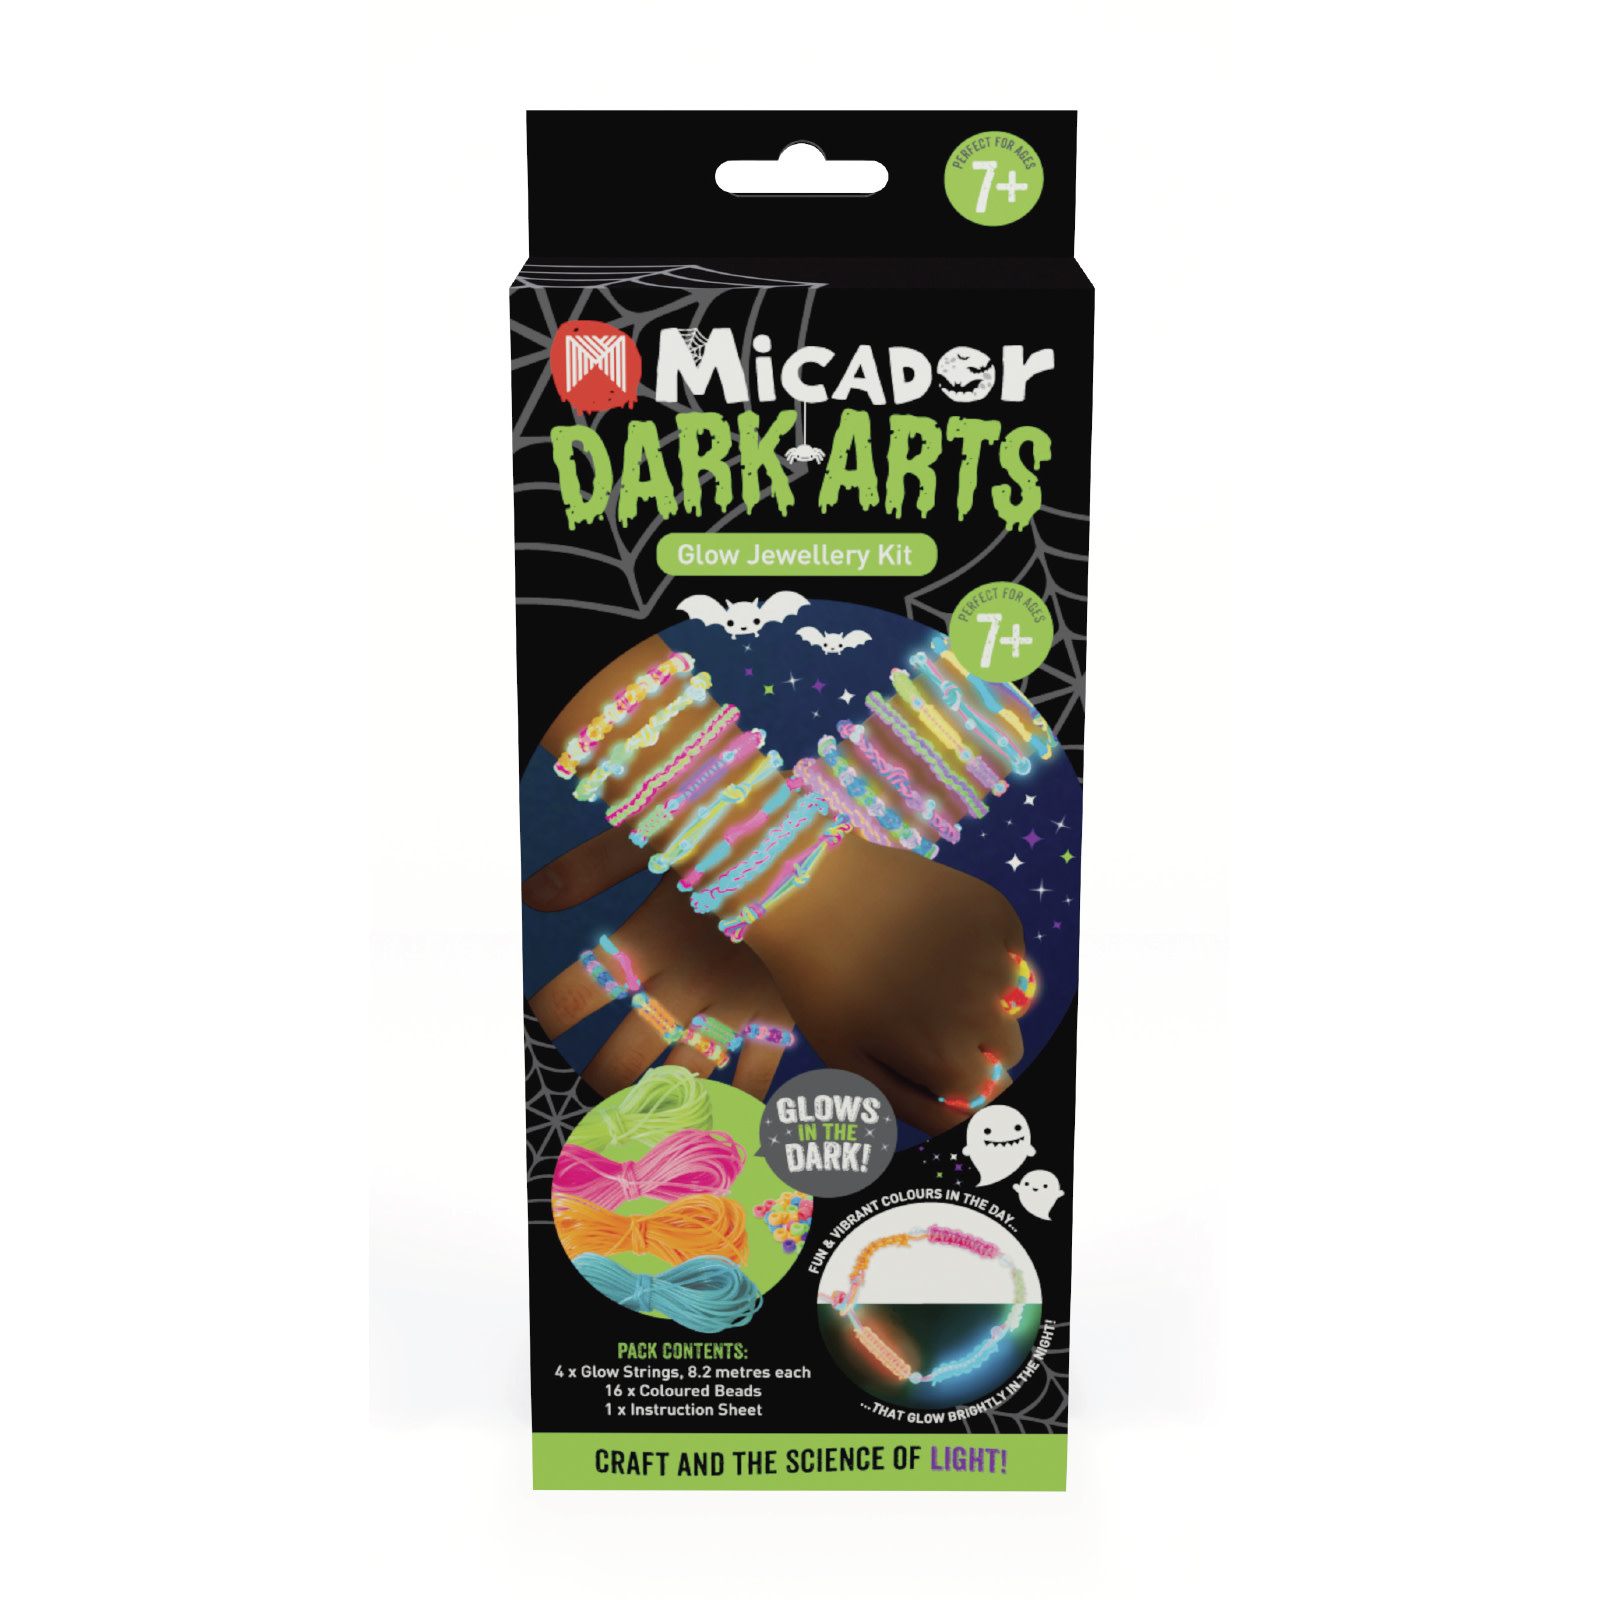 Micador Dark Arts Glow Jewellery Kit